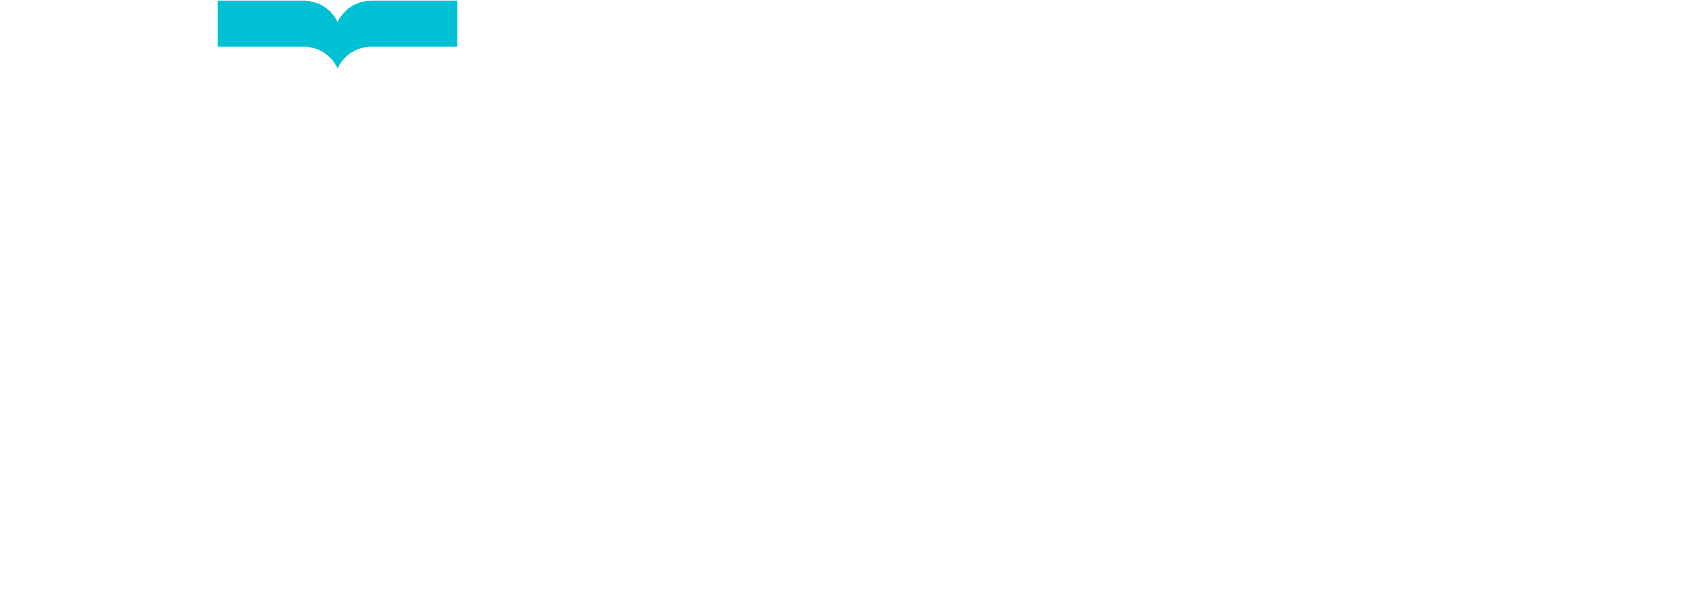 Zorkas Academy